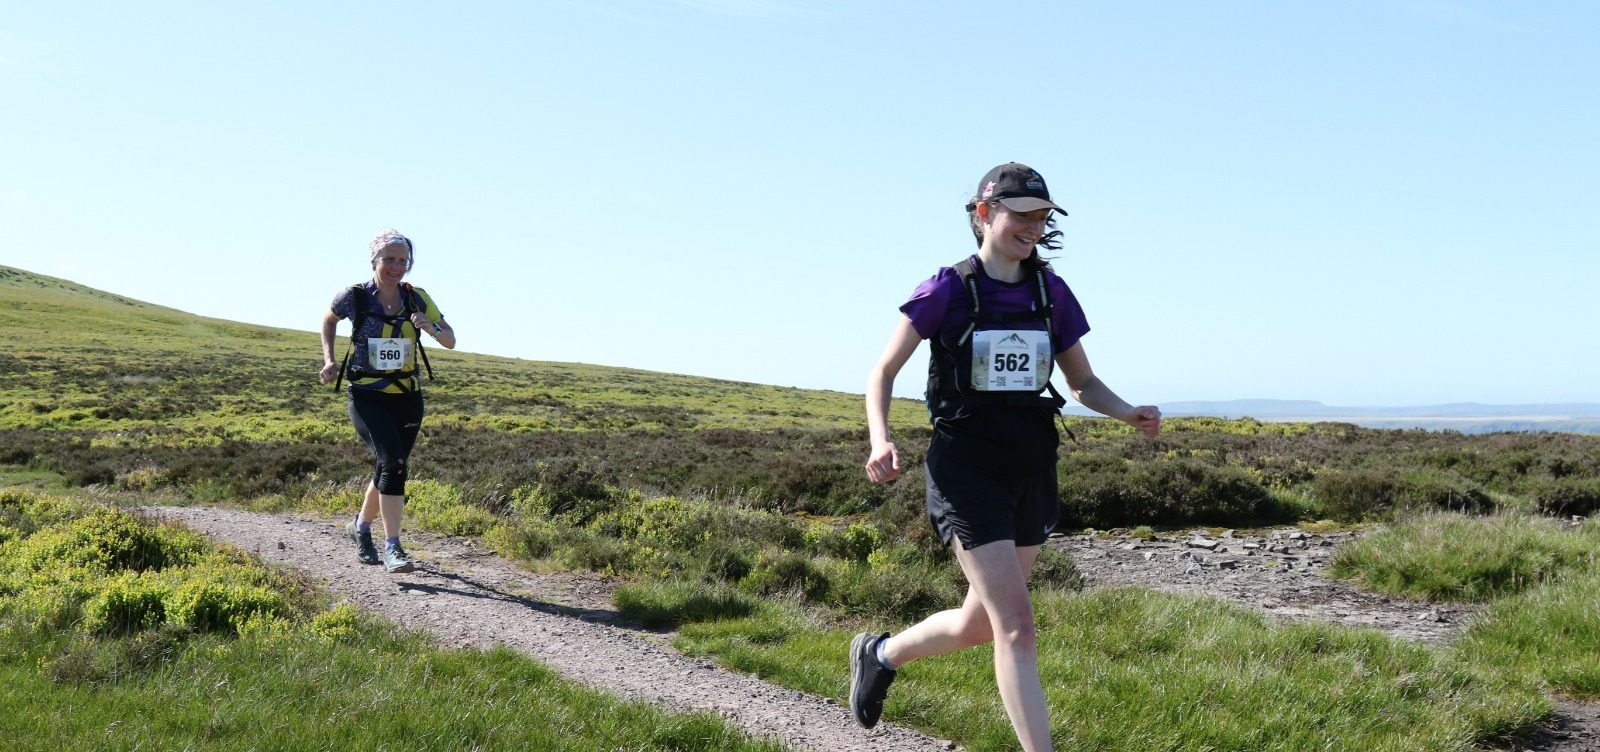 Sarah and her mum running a half marathon to raise money for Women in Sport